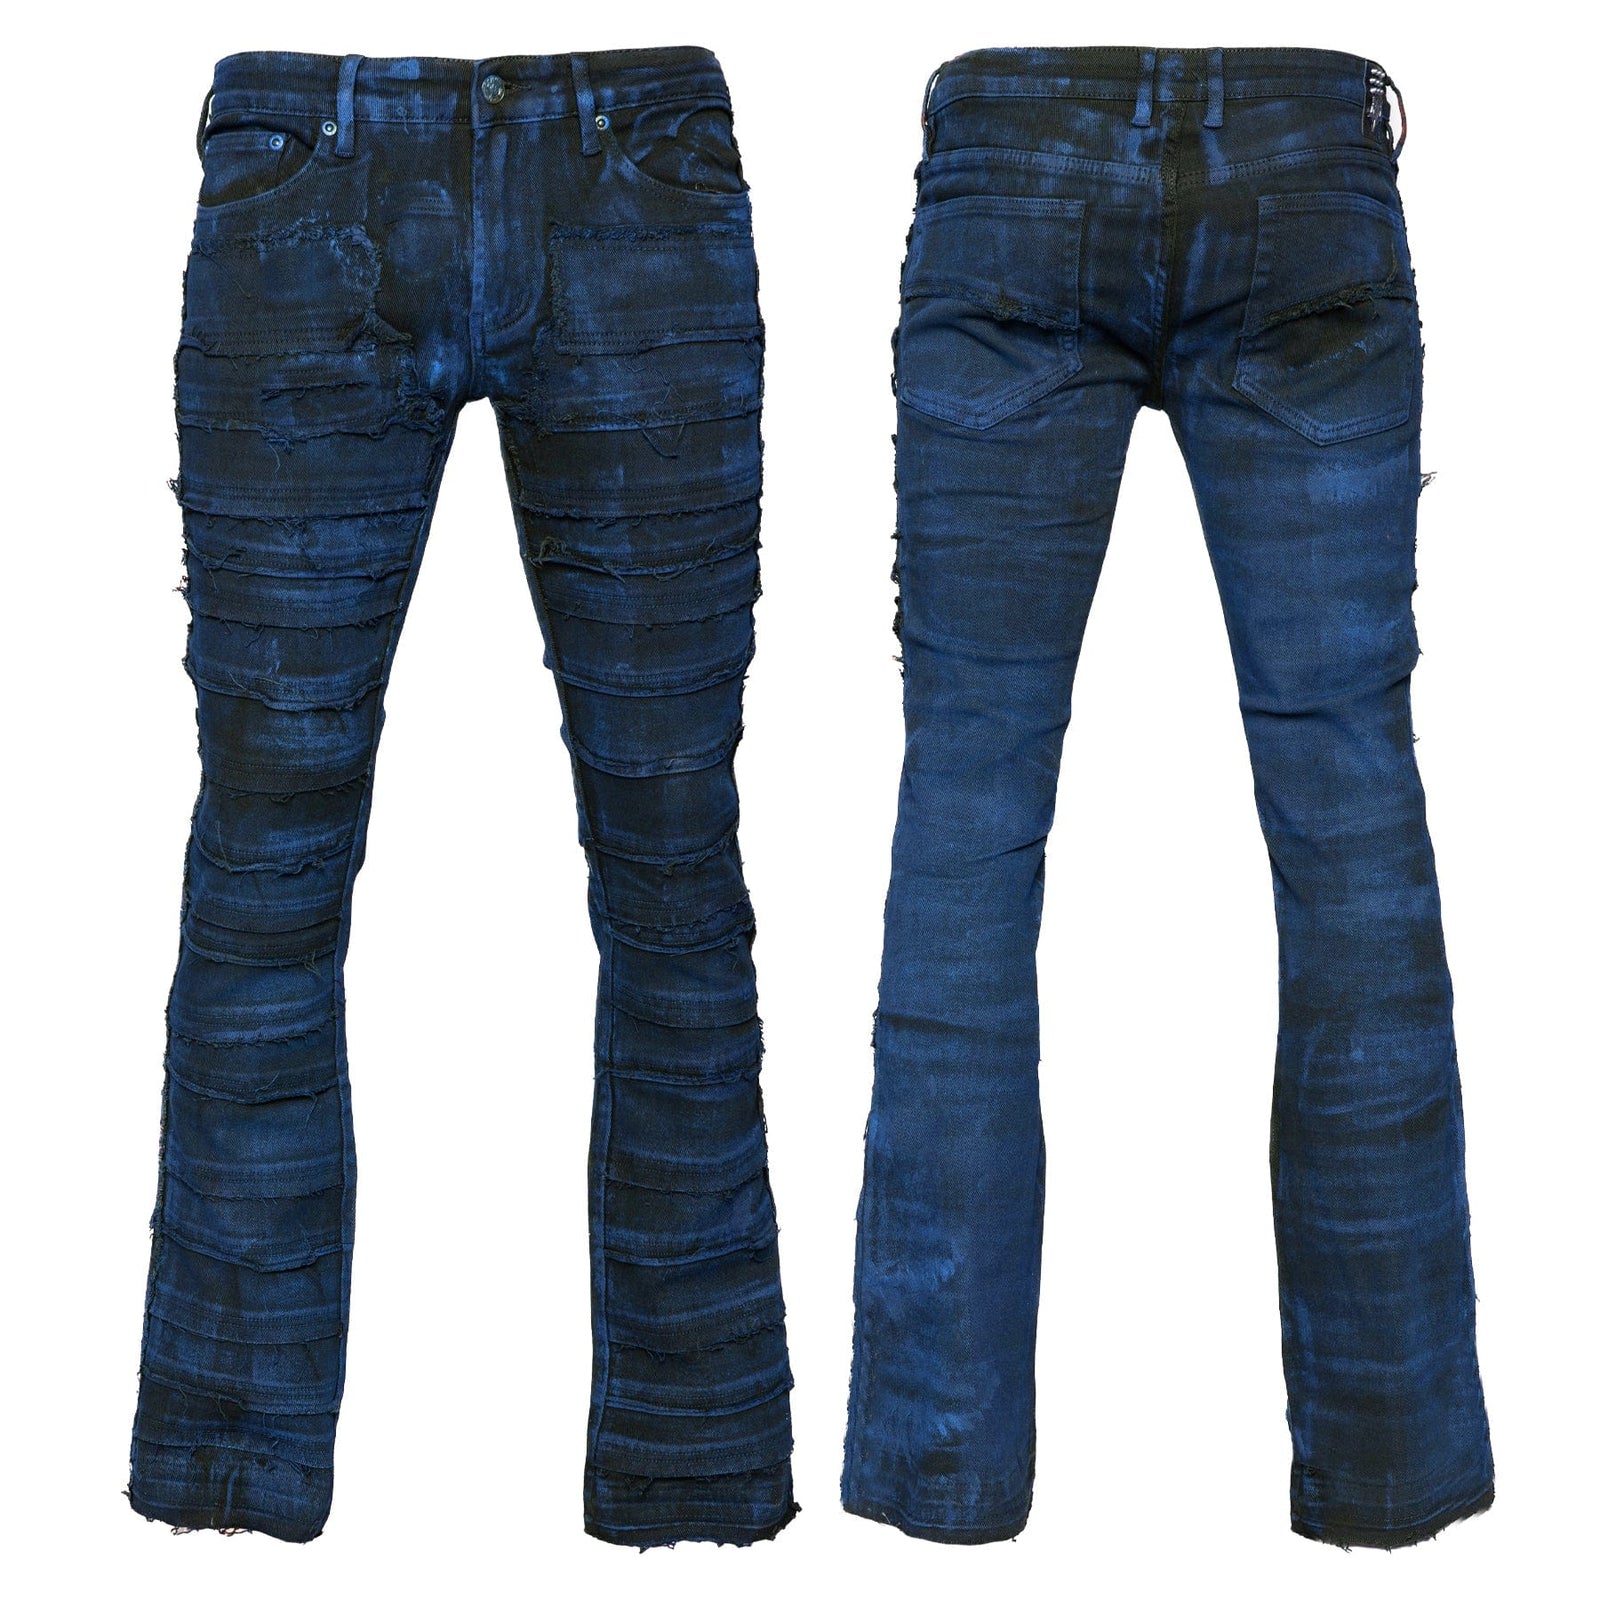 Custom Chop Shop Pants Wornstar Custom Jeans - Bandage - Cobalt Blue Alloy Washed